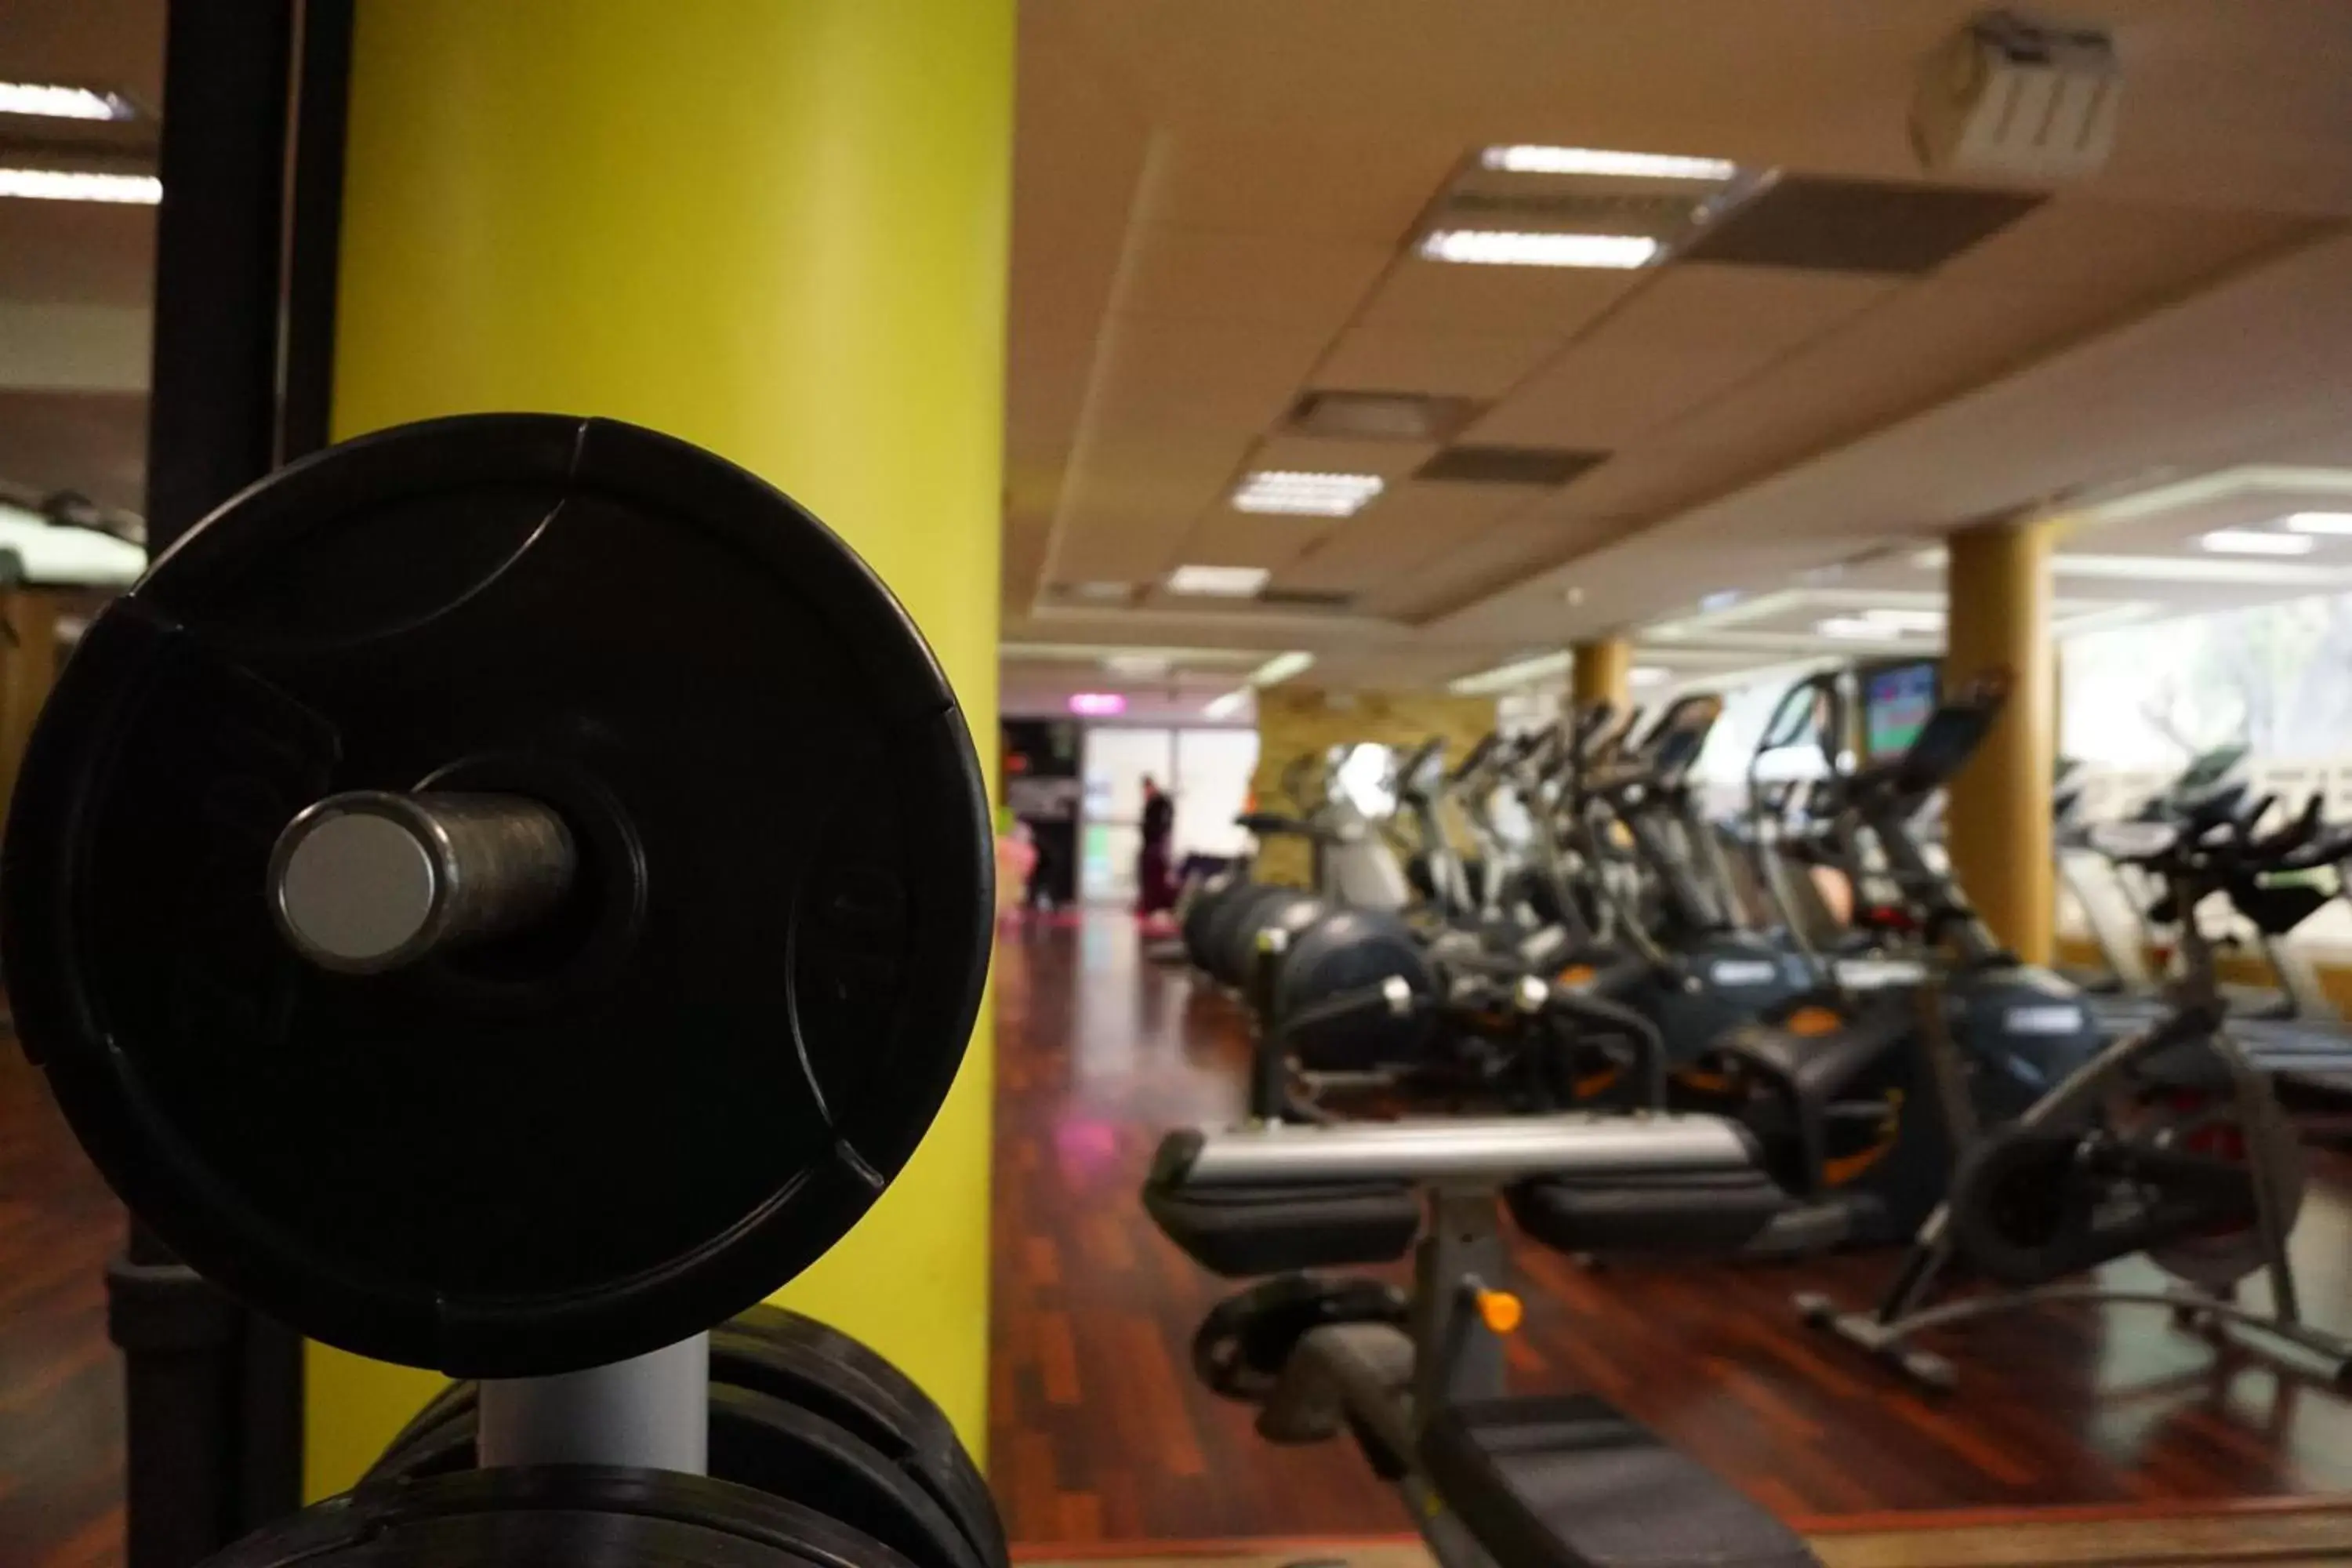 Fitness centre/facilities, Fitness Center/Facilities in Hotel Black Mexico City